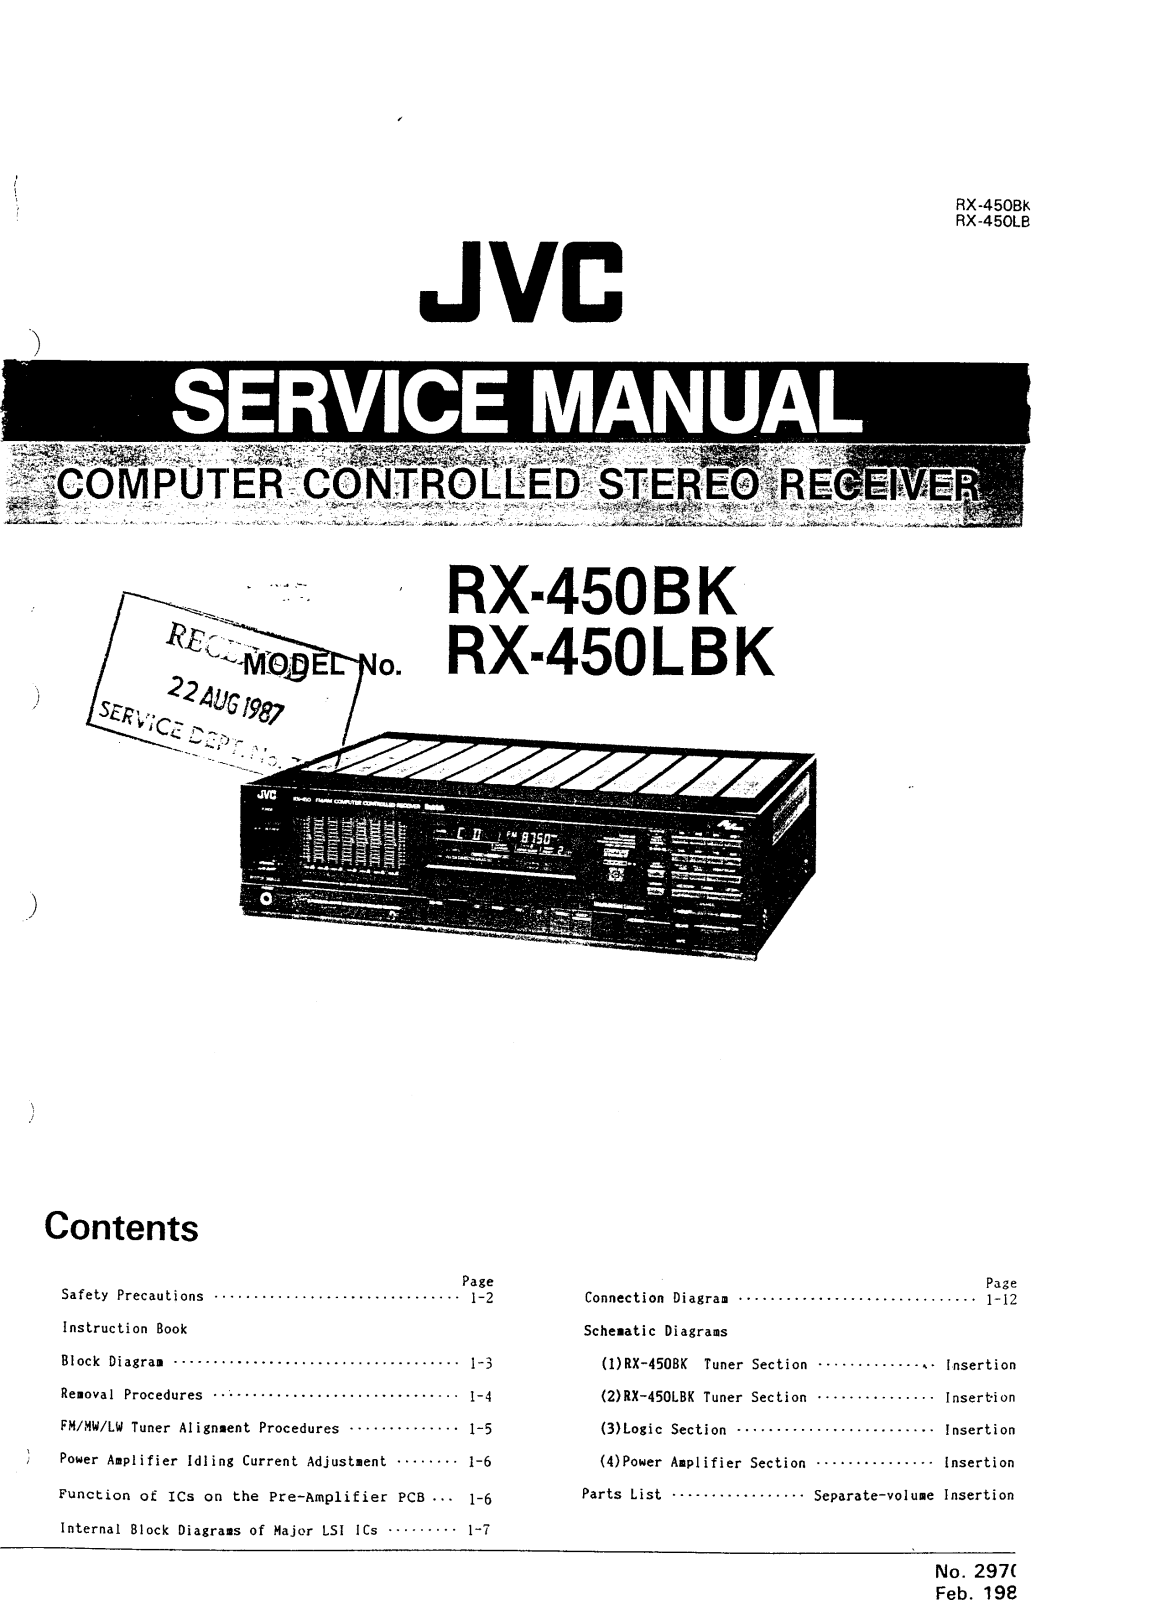 JVC RX450 Service Manual